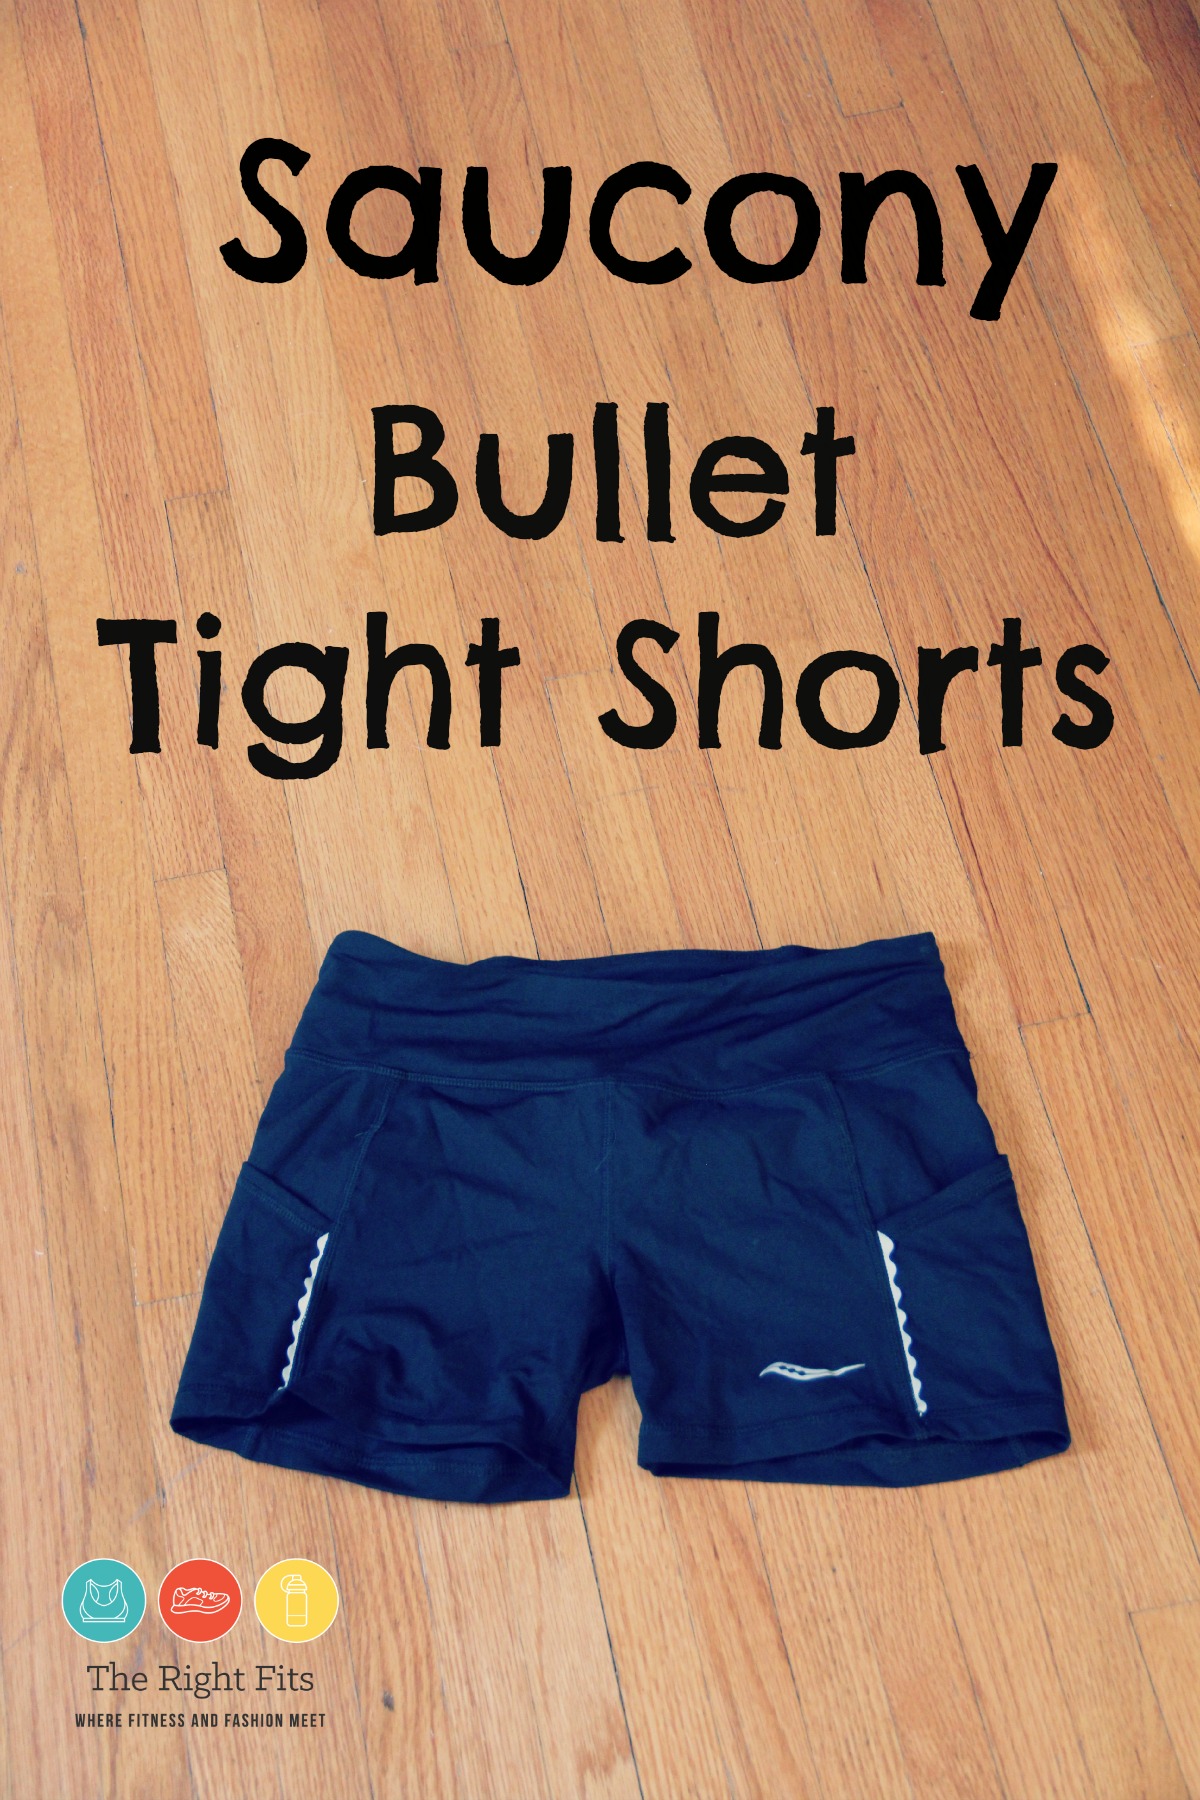 saucony bullet tight shorts